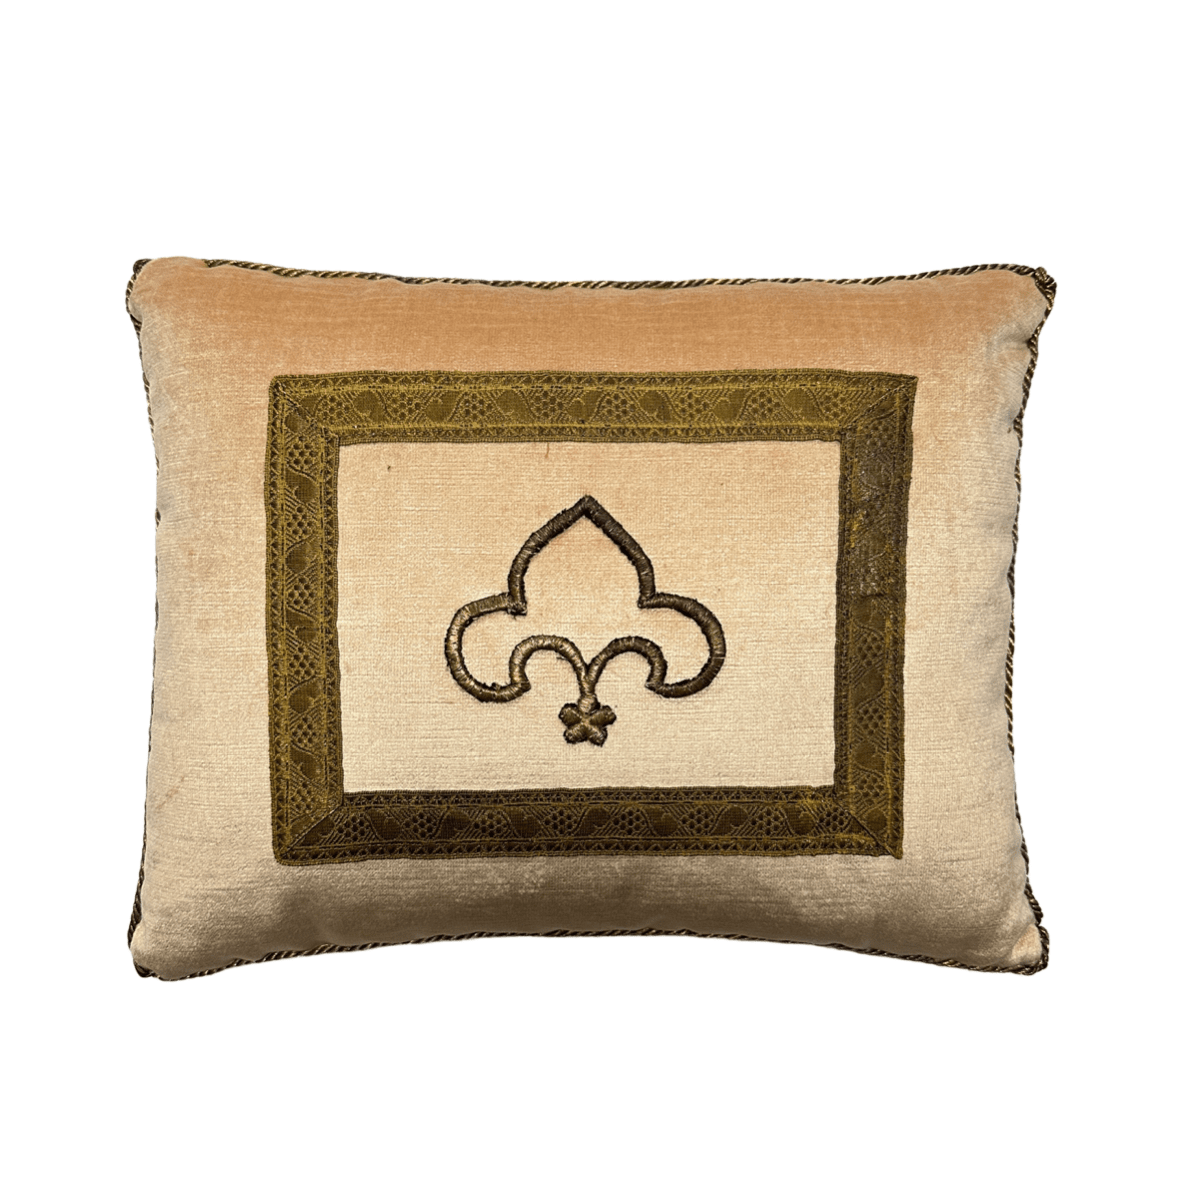 Antique Ottoman Empire Raised Gold Metallic Embroidery (#E040723A&B | 12 x 15") New Pillows B. Viz Design 